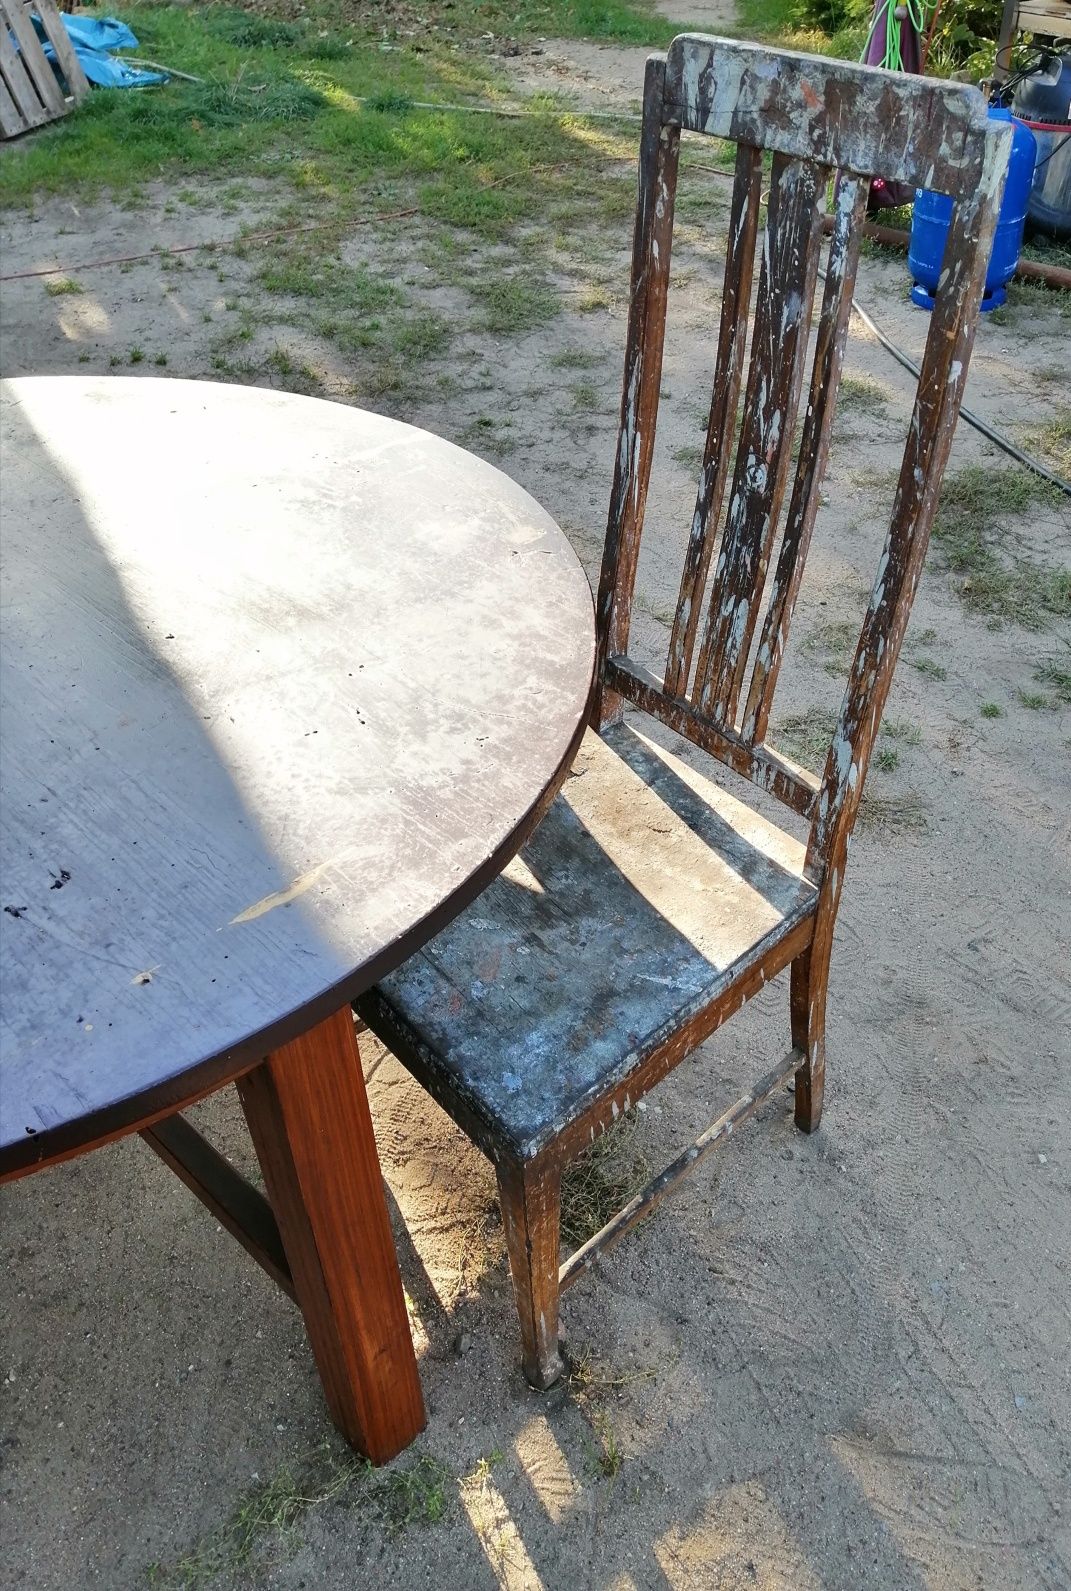 Stary stół i 2 krzesła